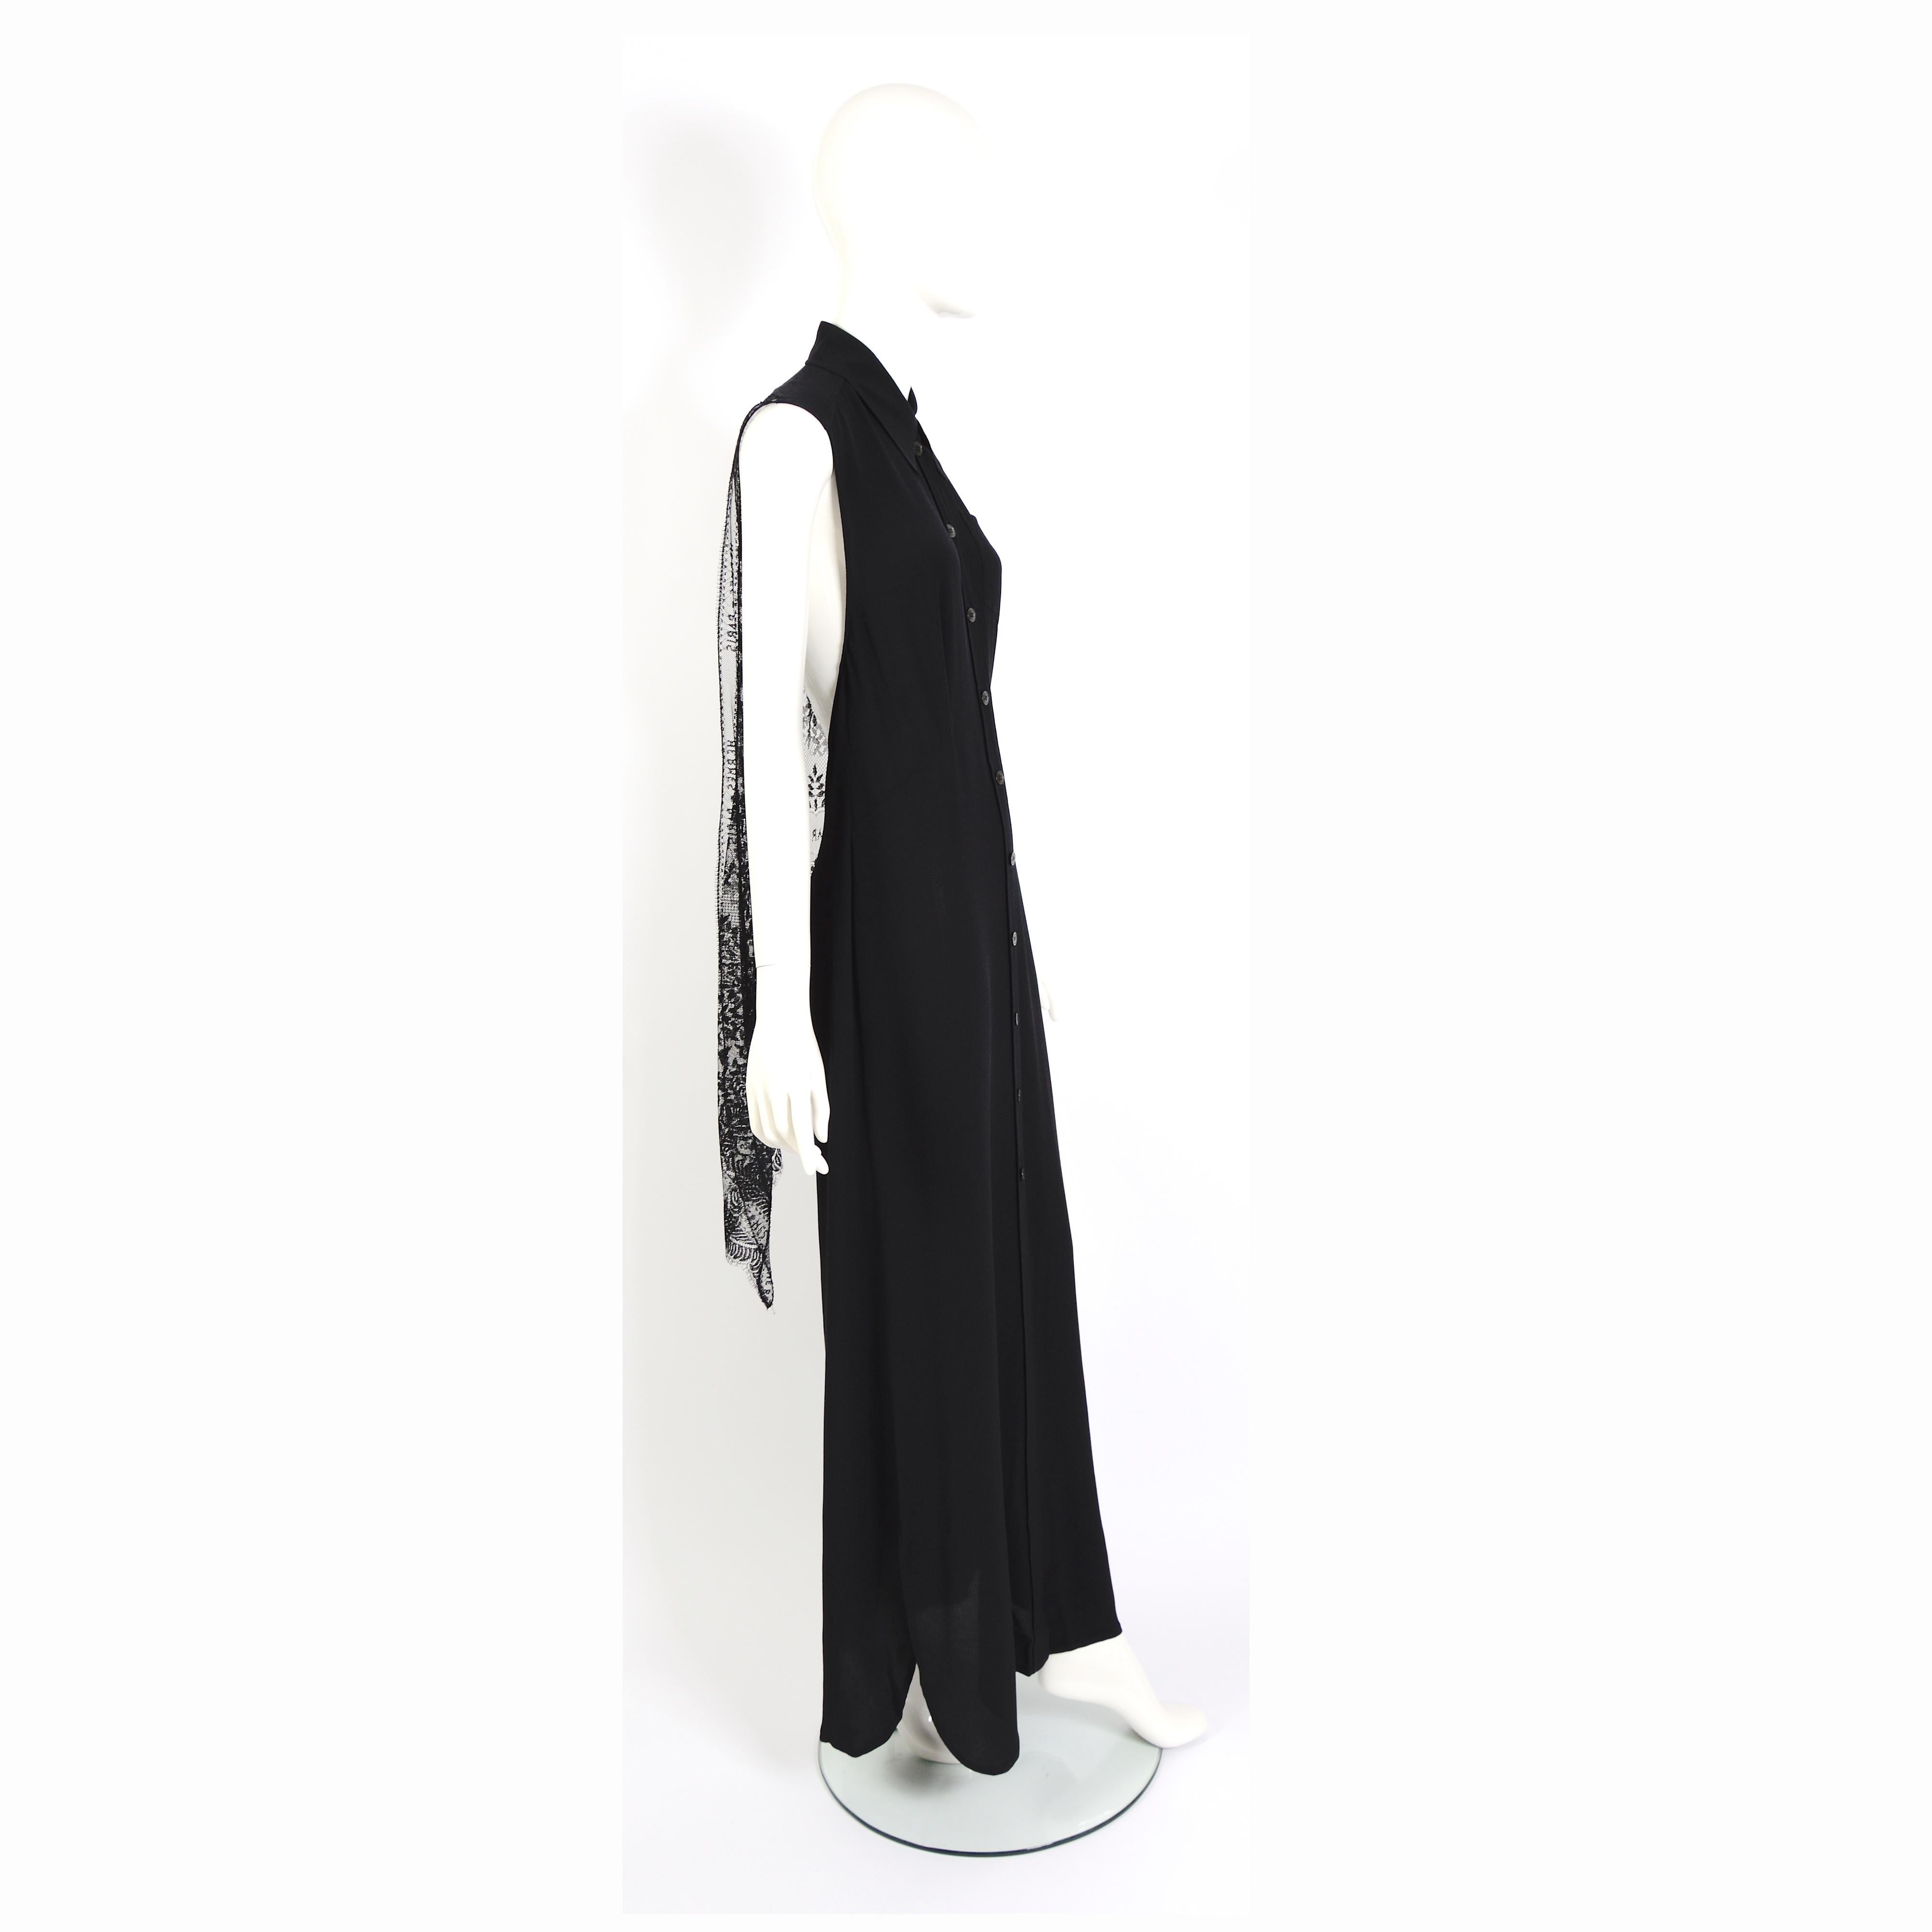 Hermes by Jean Paul Gaultier runway 2006 black guipure lace and silk long dress 2